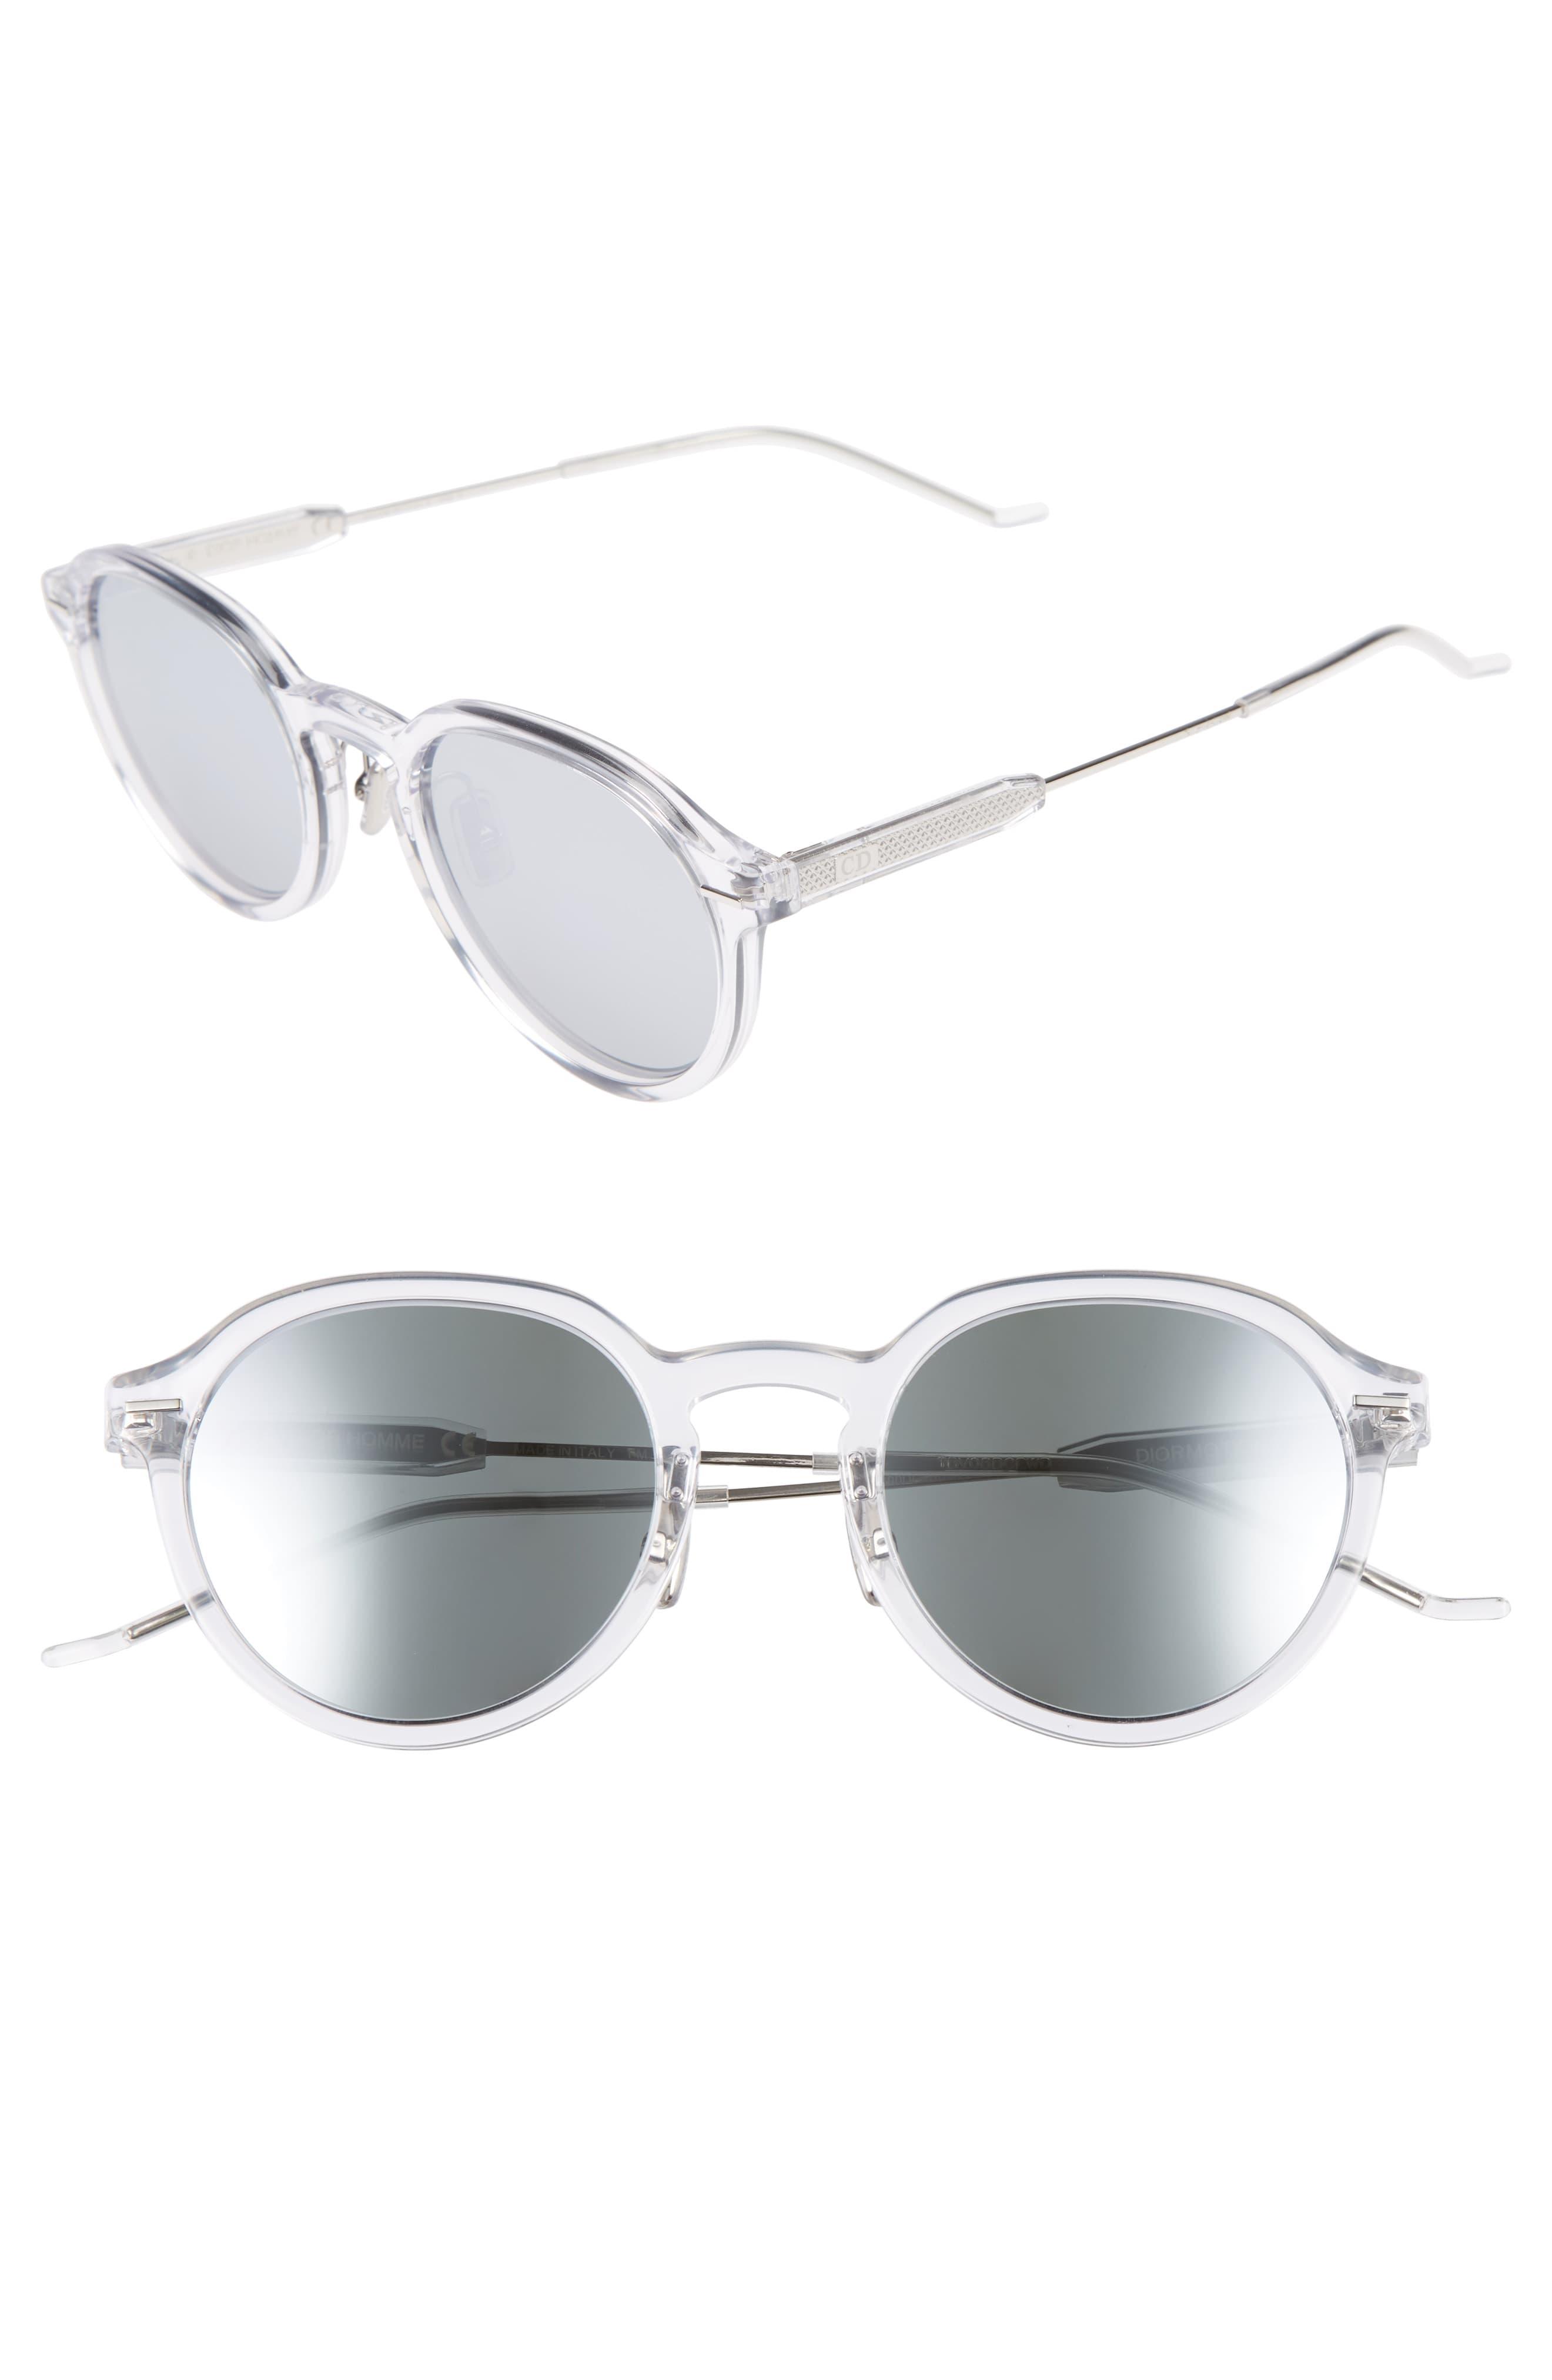 dior motion 2 sunglasses